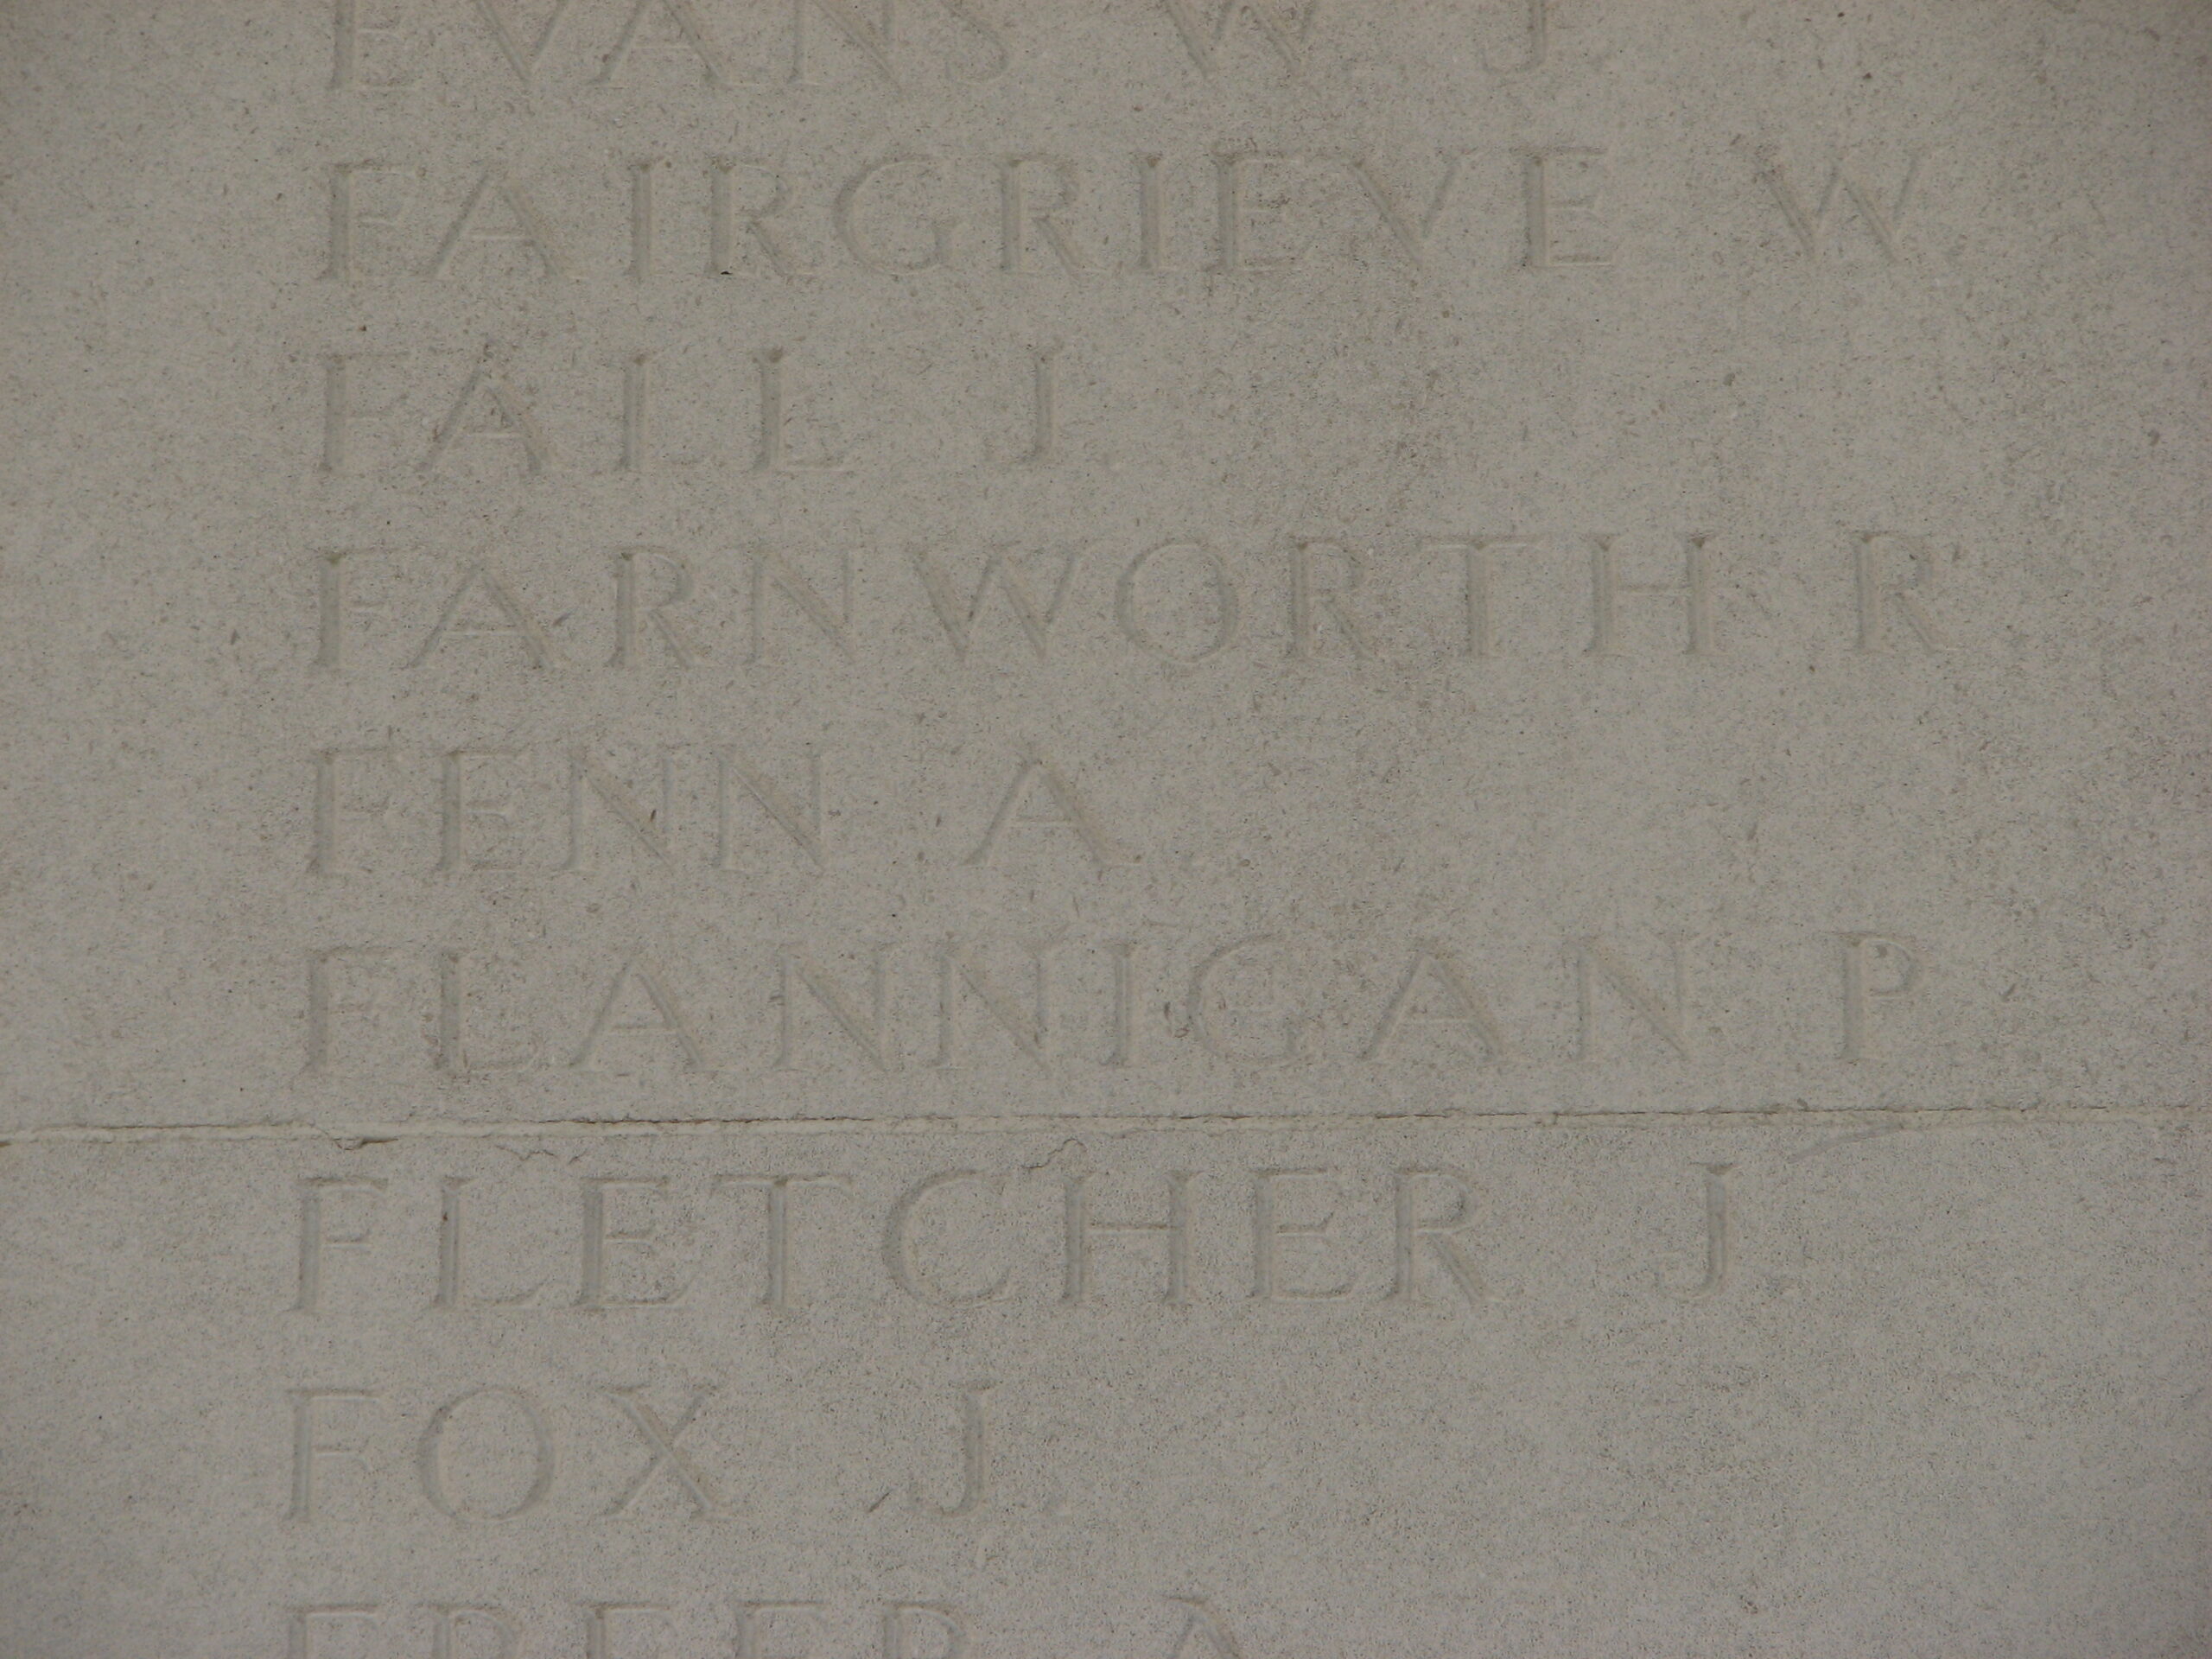 Arthur's name inscribed on the Arras Memorial<br>MA